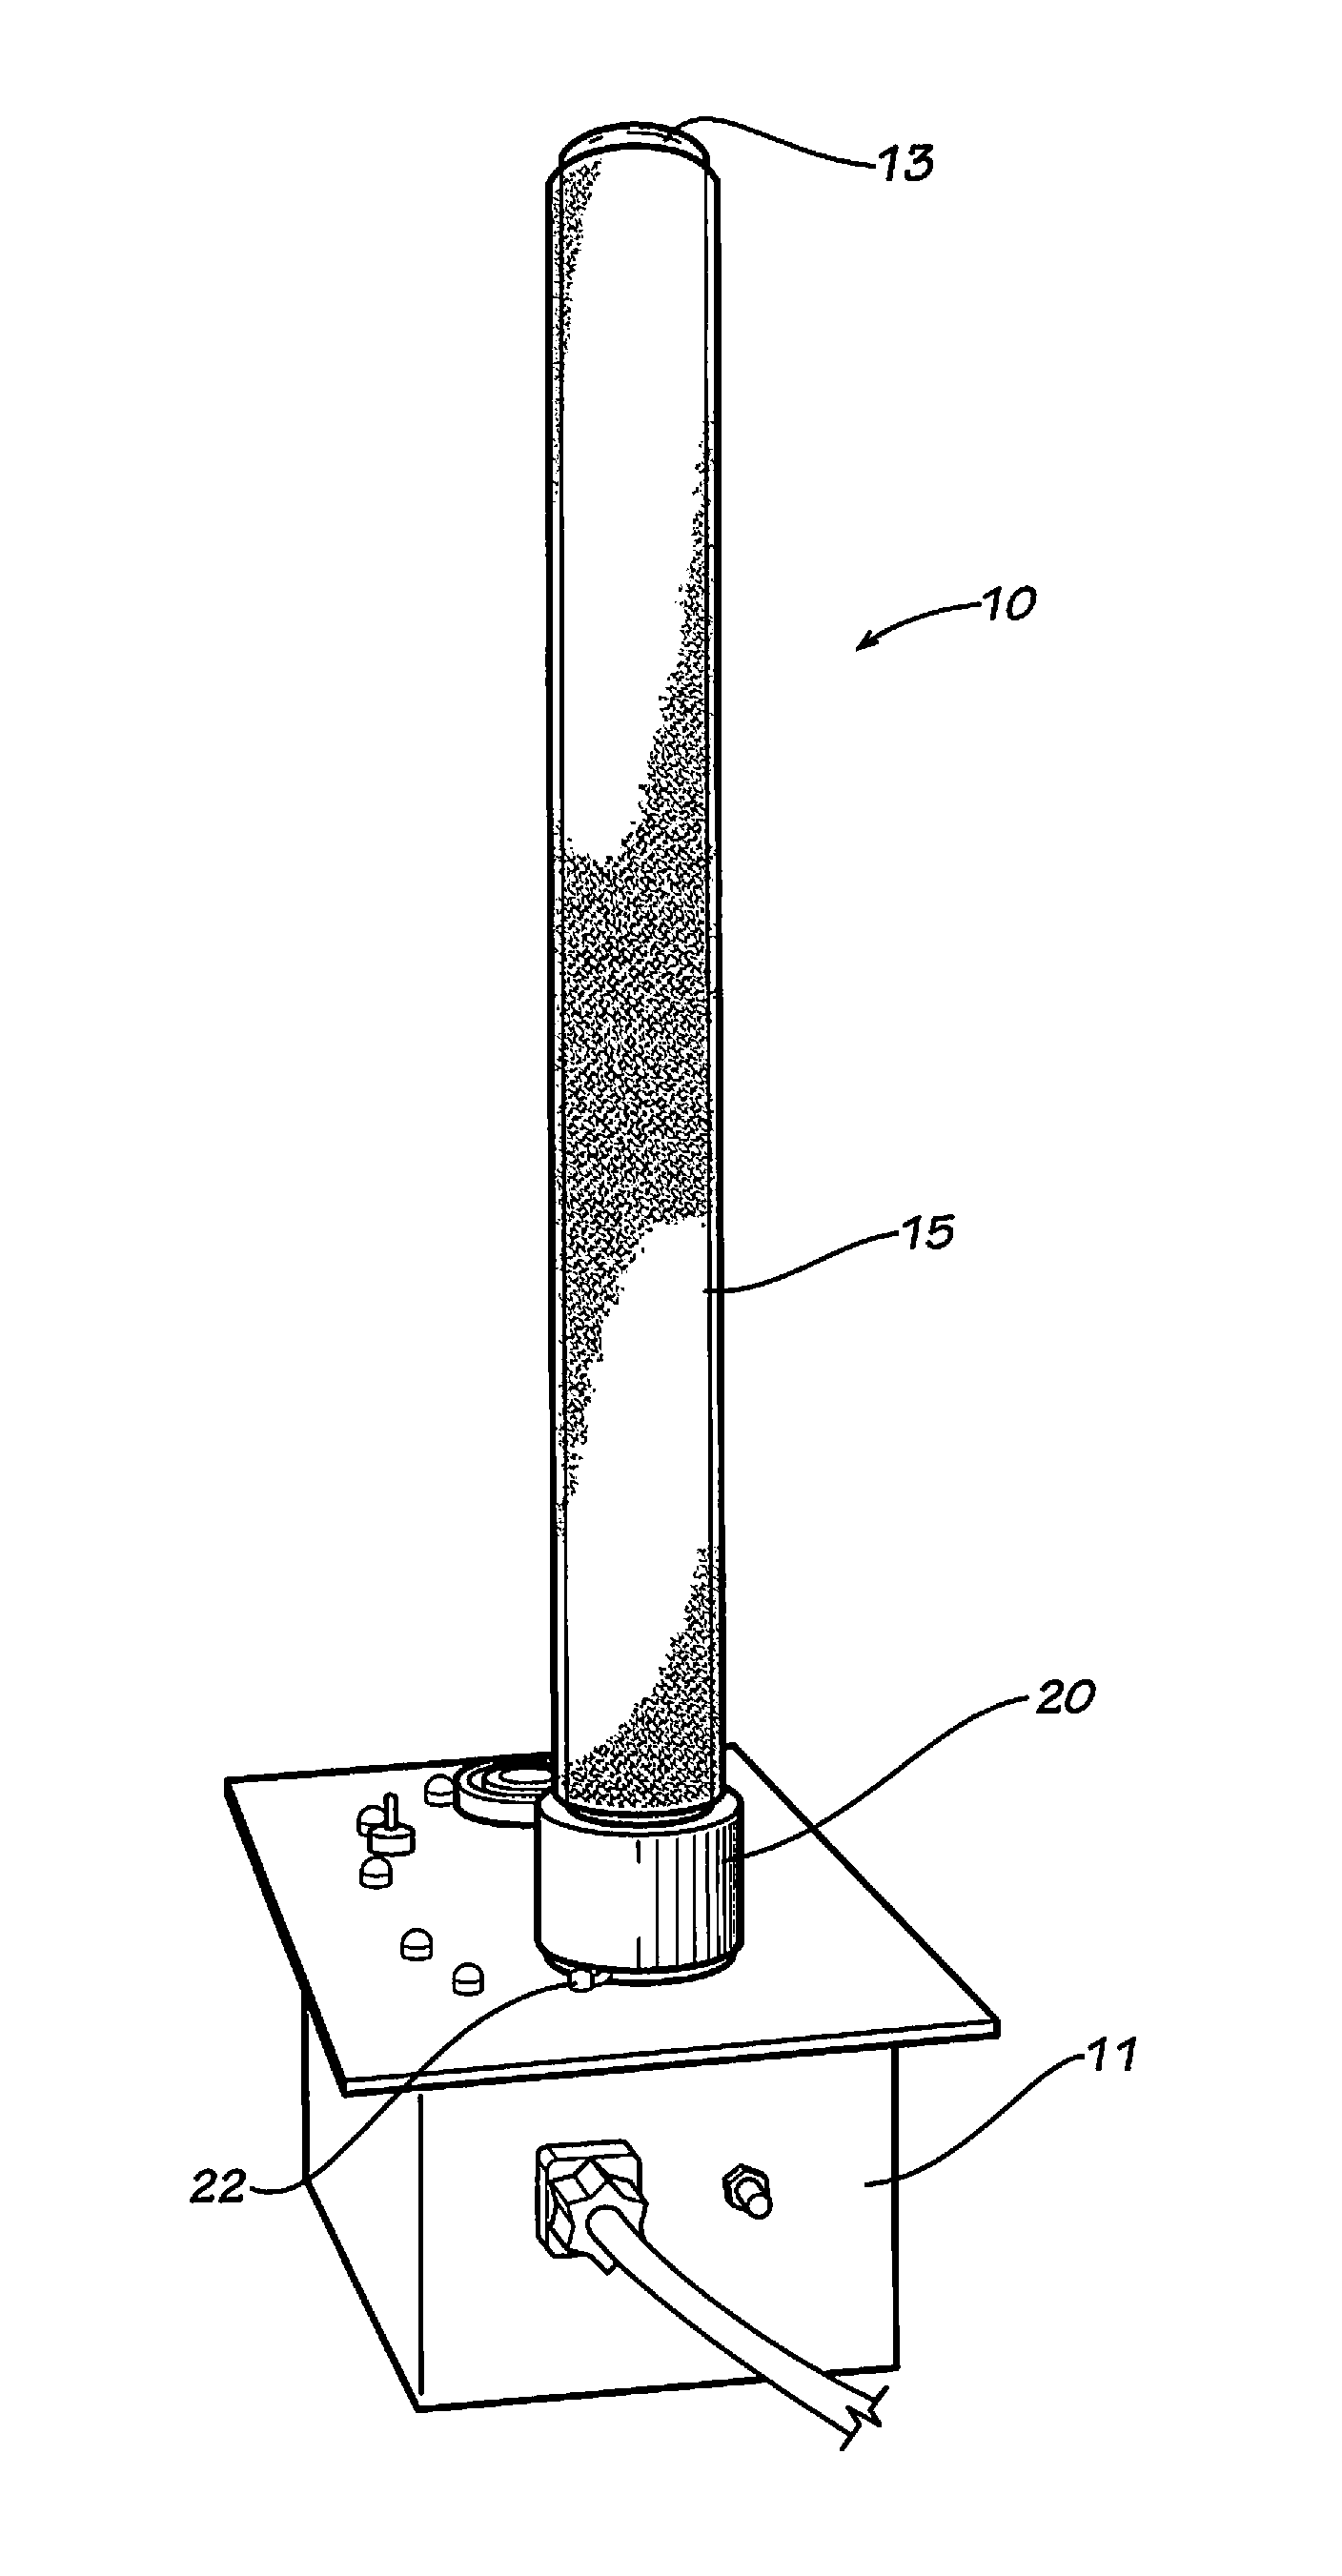 Bi-polar ionization tube base and tube socket